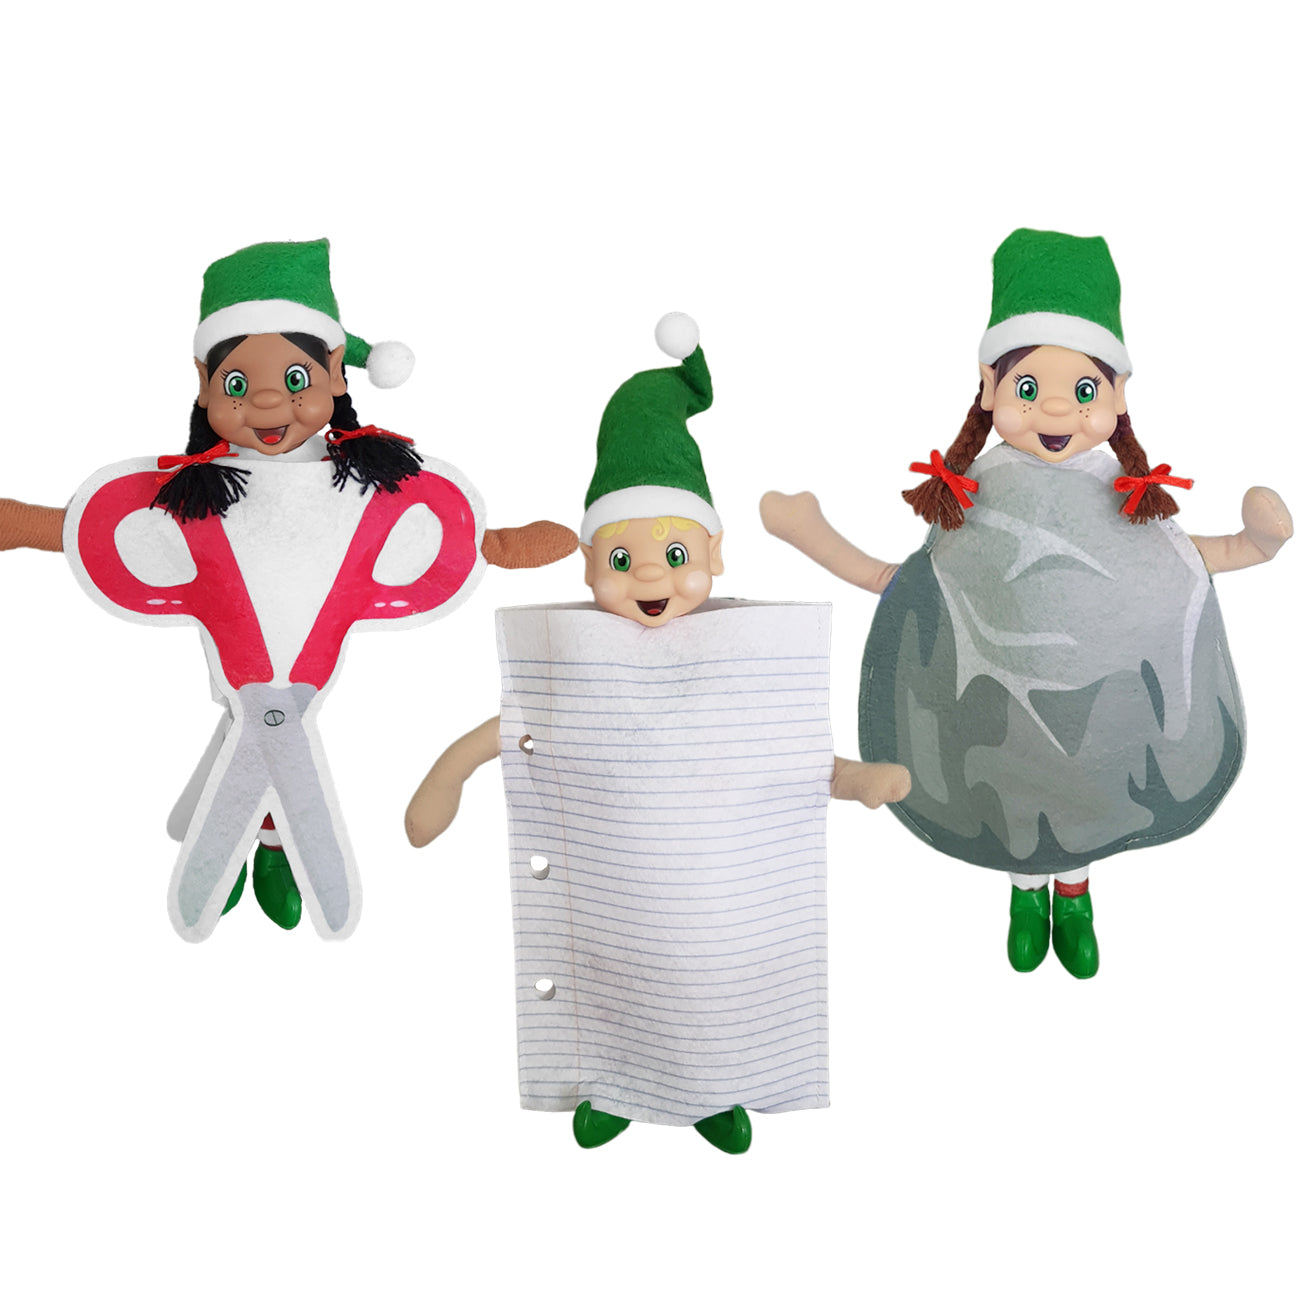 Scissor Paper Rock Elf Costume